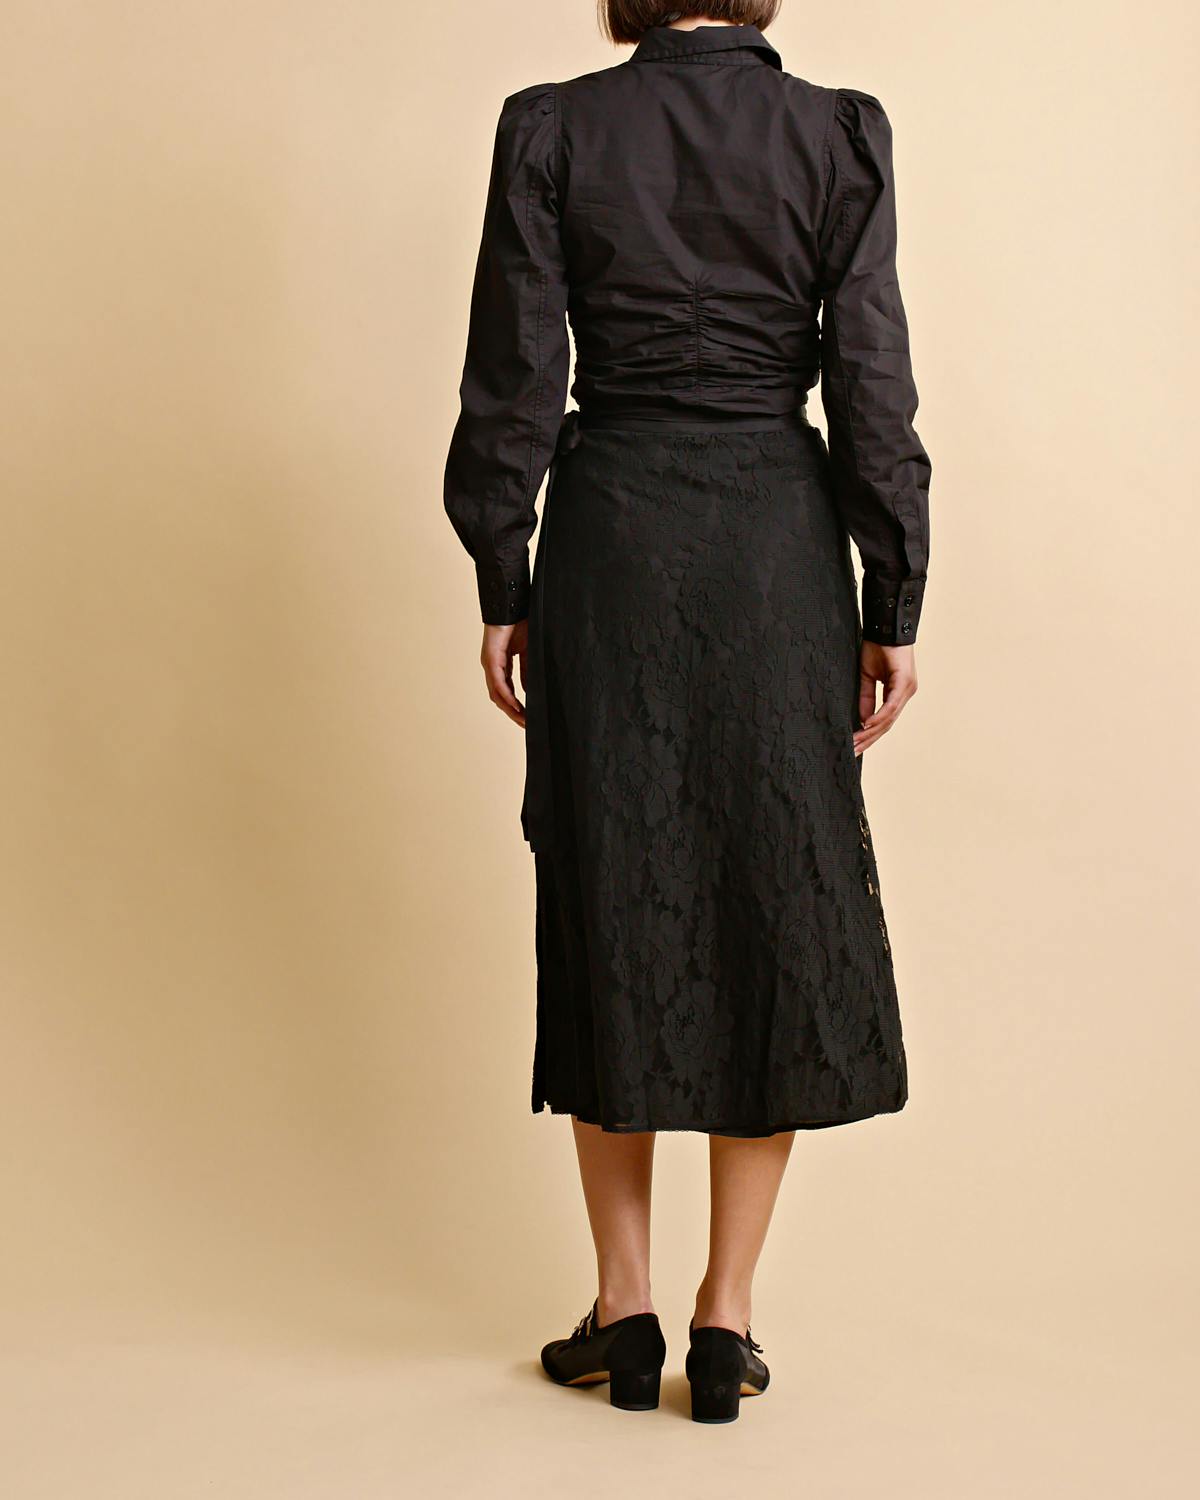 Lace Skirt, Black. Image #5